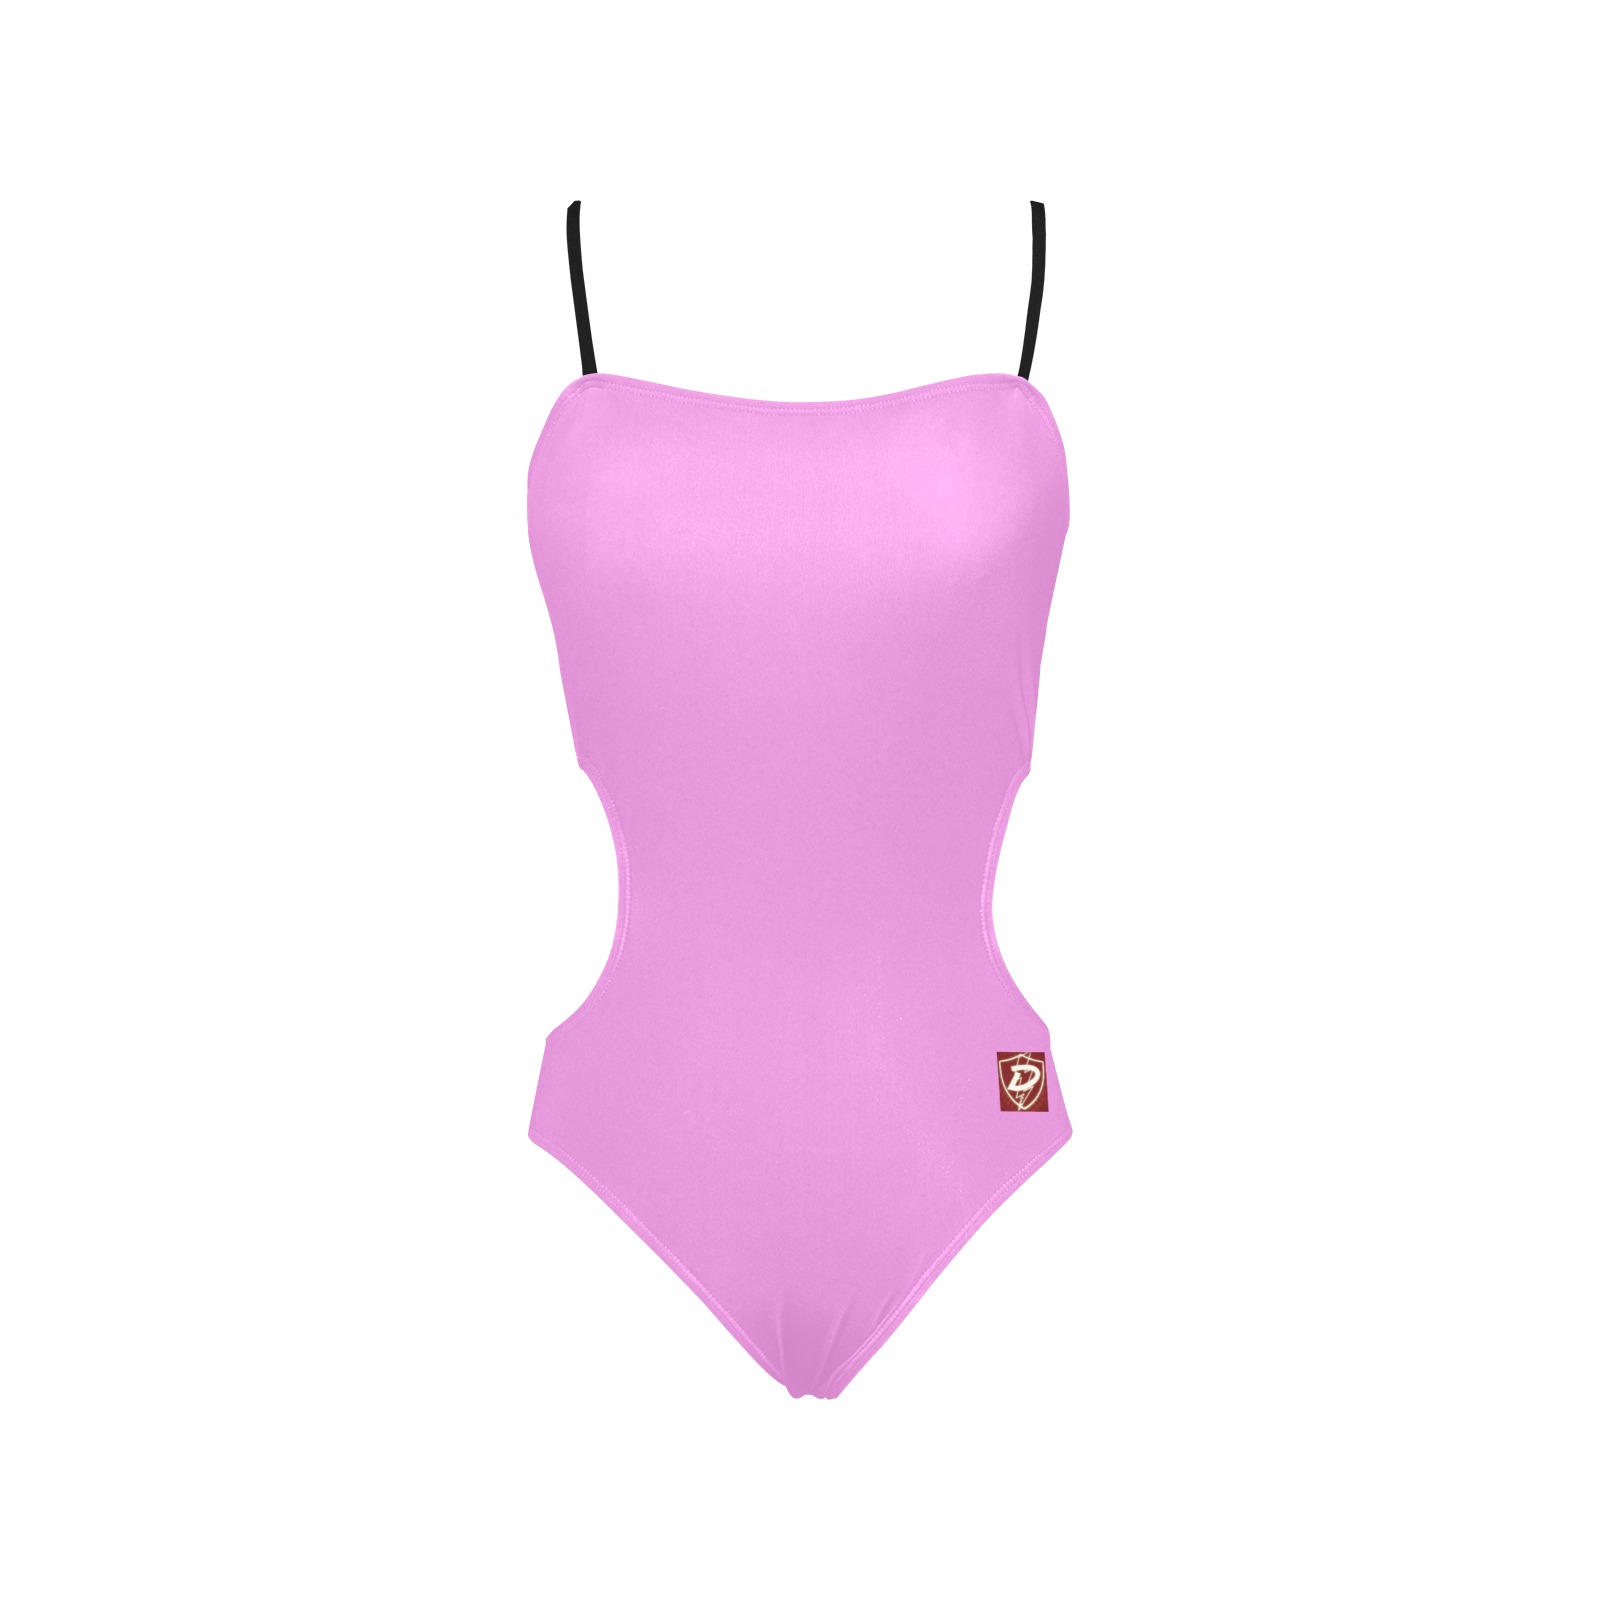 DIONIO - Women's Pink Cut Out Spaghetti Strap Swimsuit Spaghetti Strap Cut Out Sides Swimsuit (Model S28)